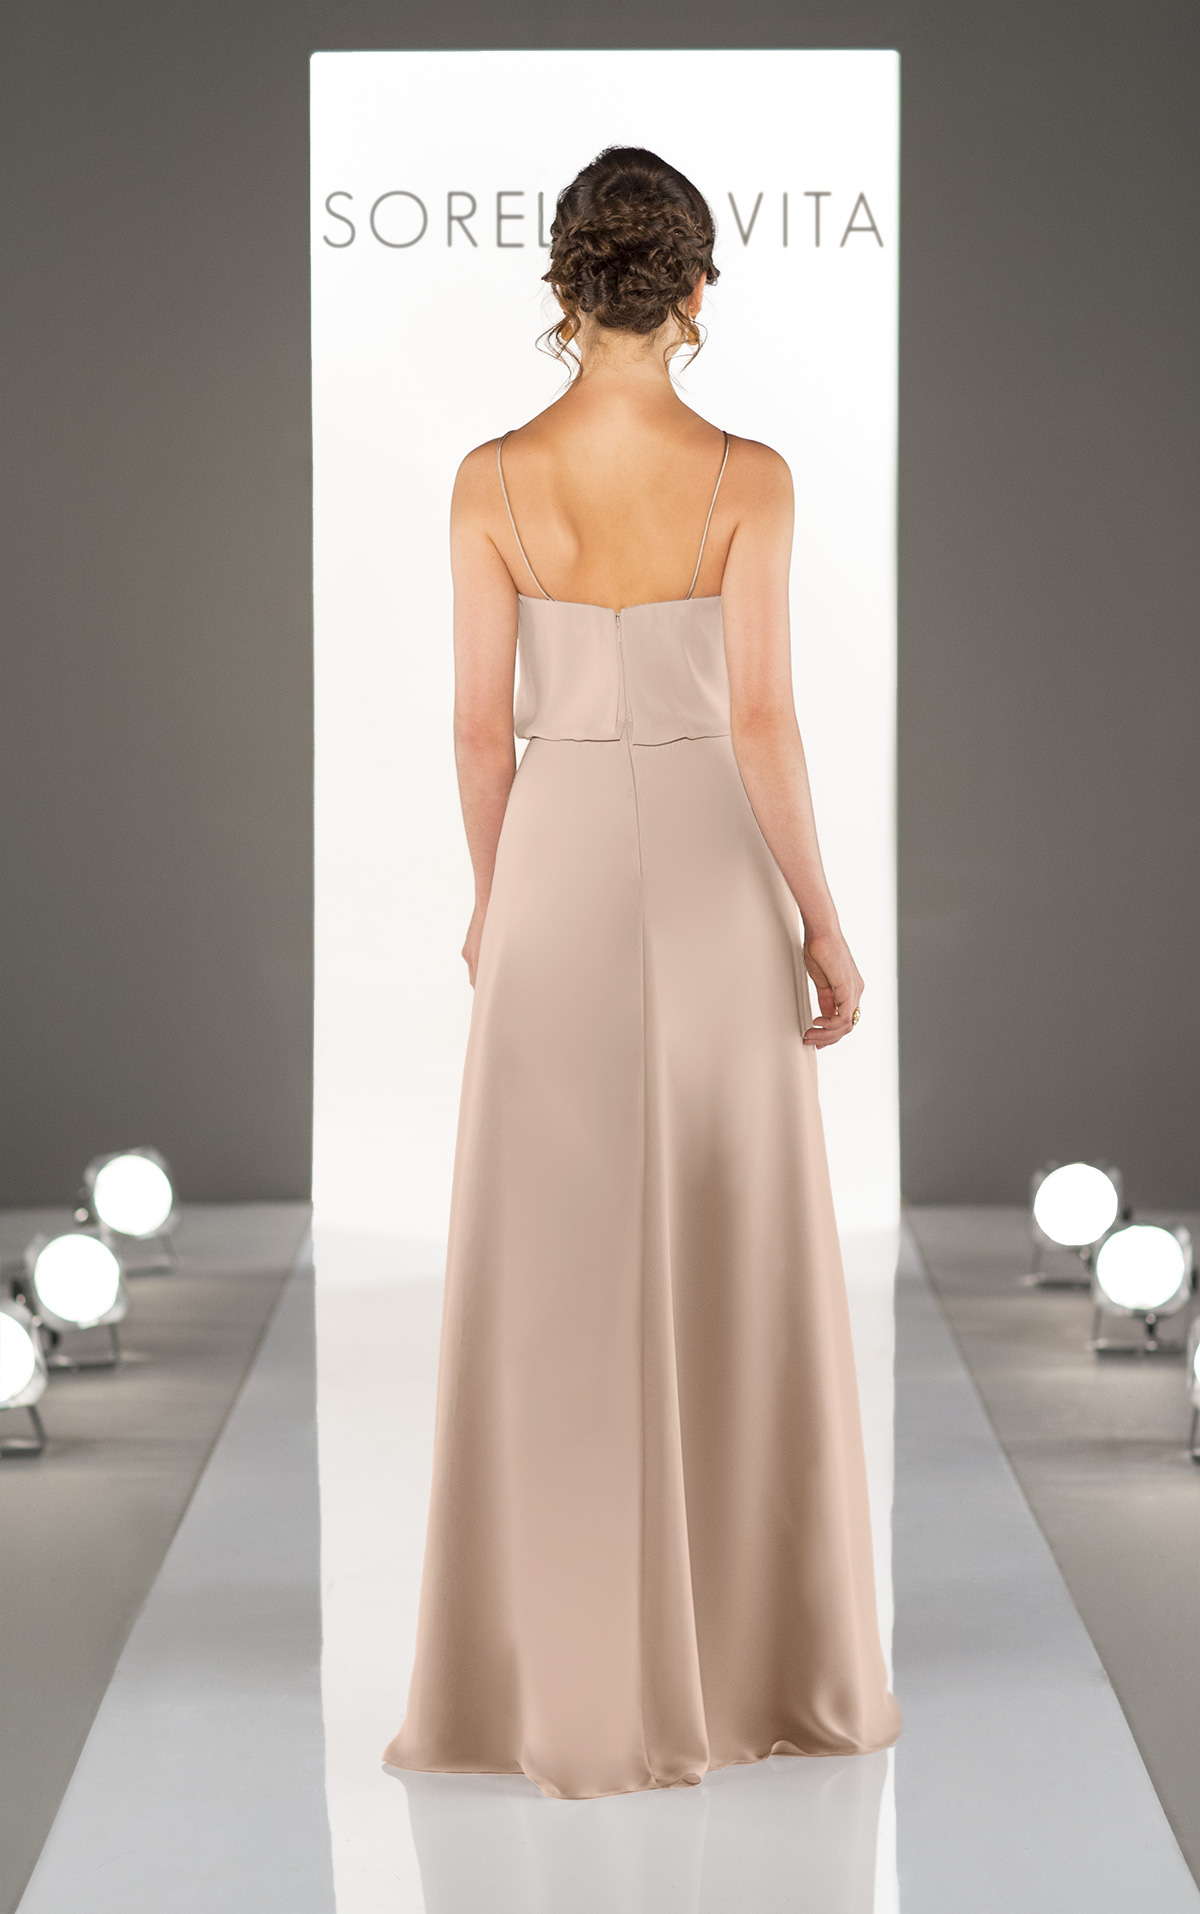 Sorella Vita Dress Style 8872 (Vintage Rose-size 10) Prom, Ball., Black-tie, Bridesmaid, Pageant